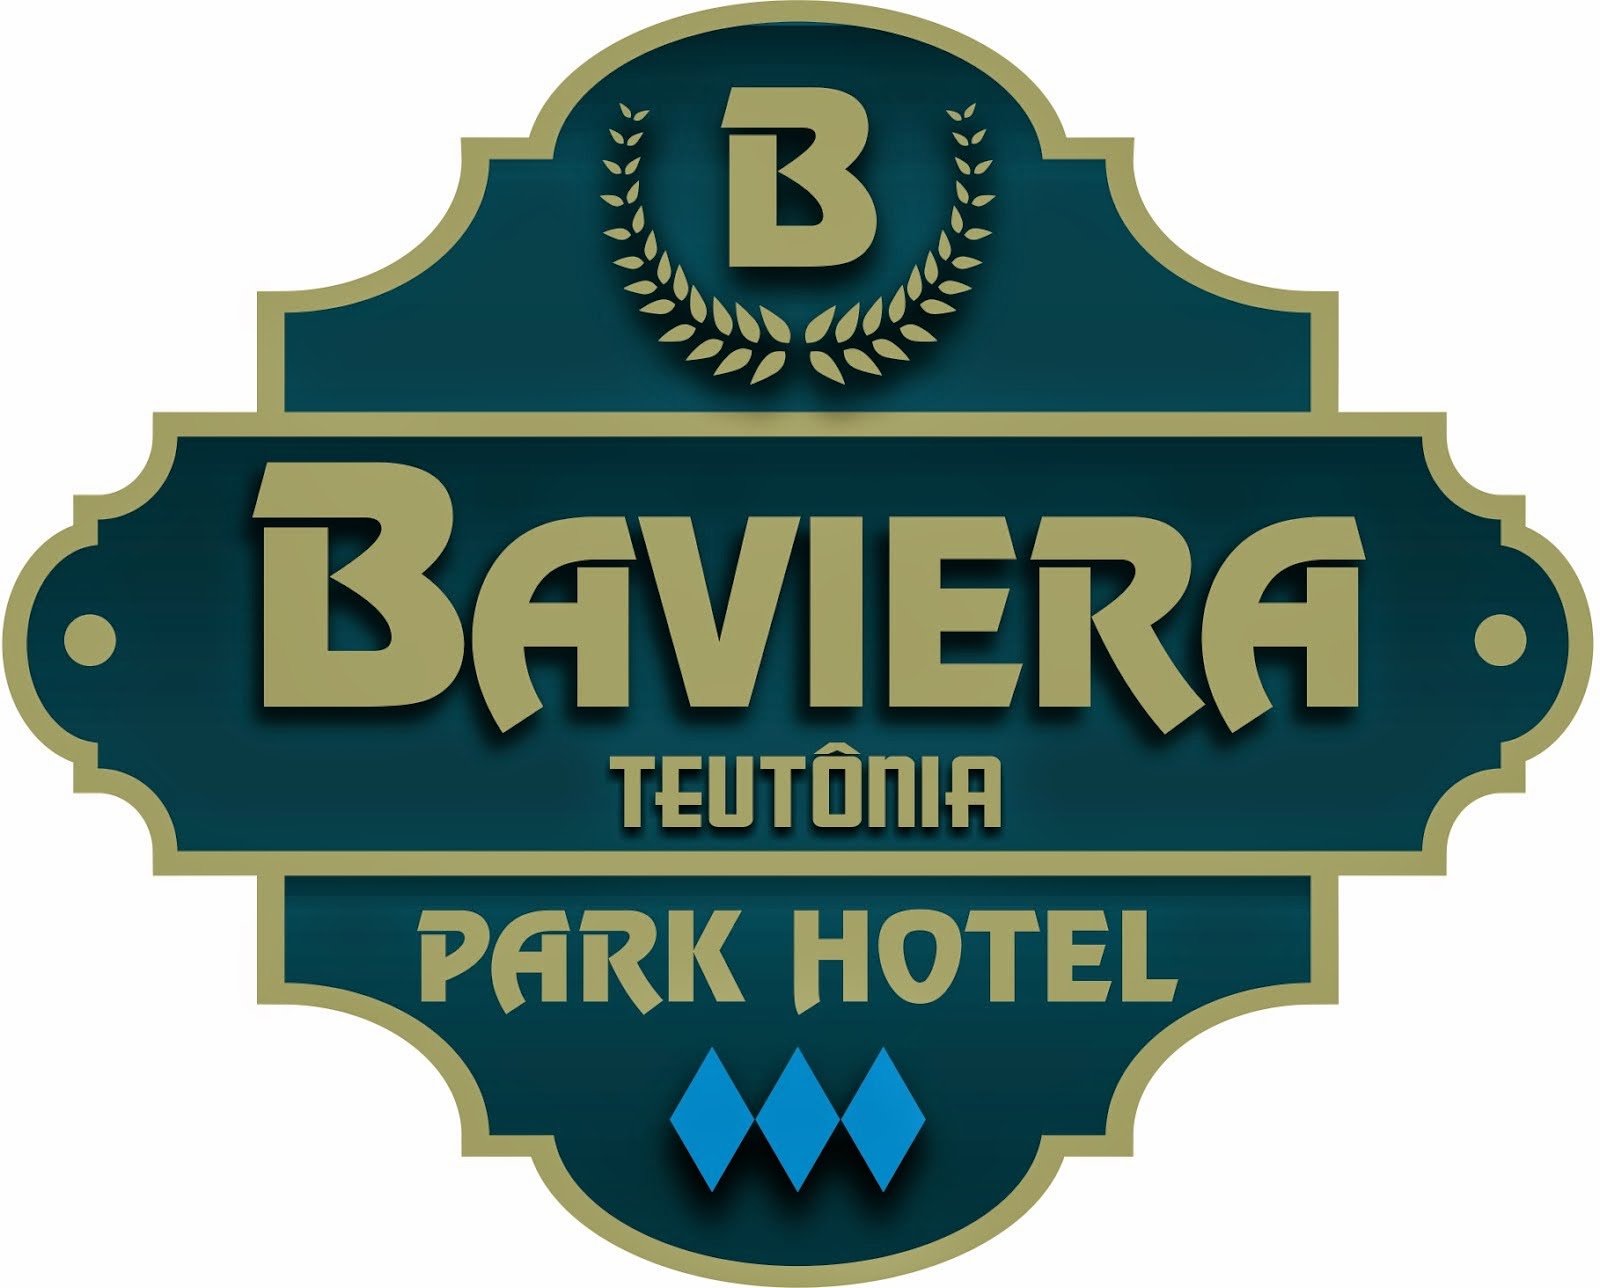 Baviera Park Hotel